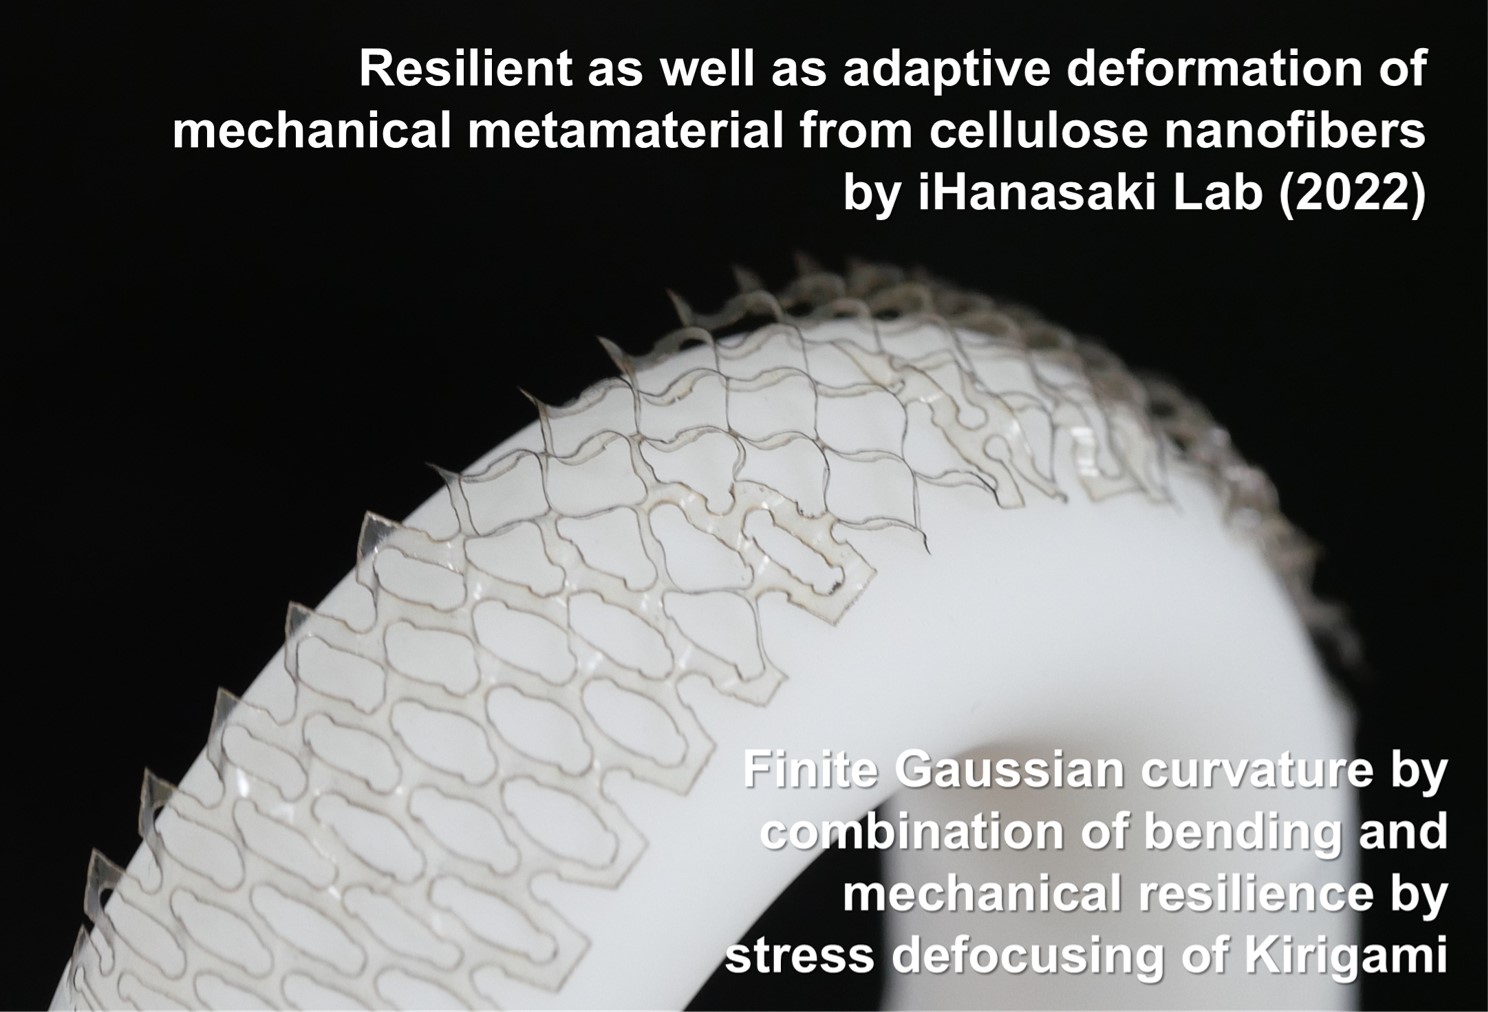 Resilient Kirigami metamaterial made of cellulose nanopaper